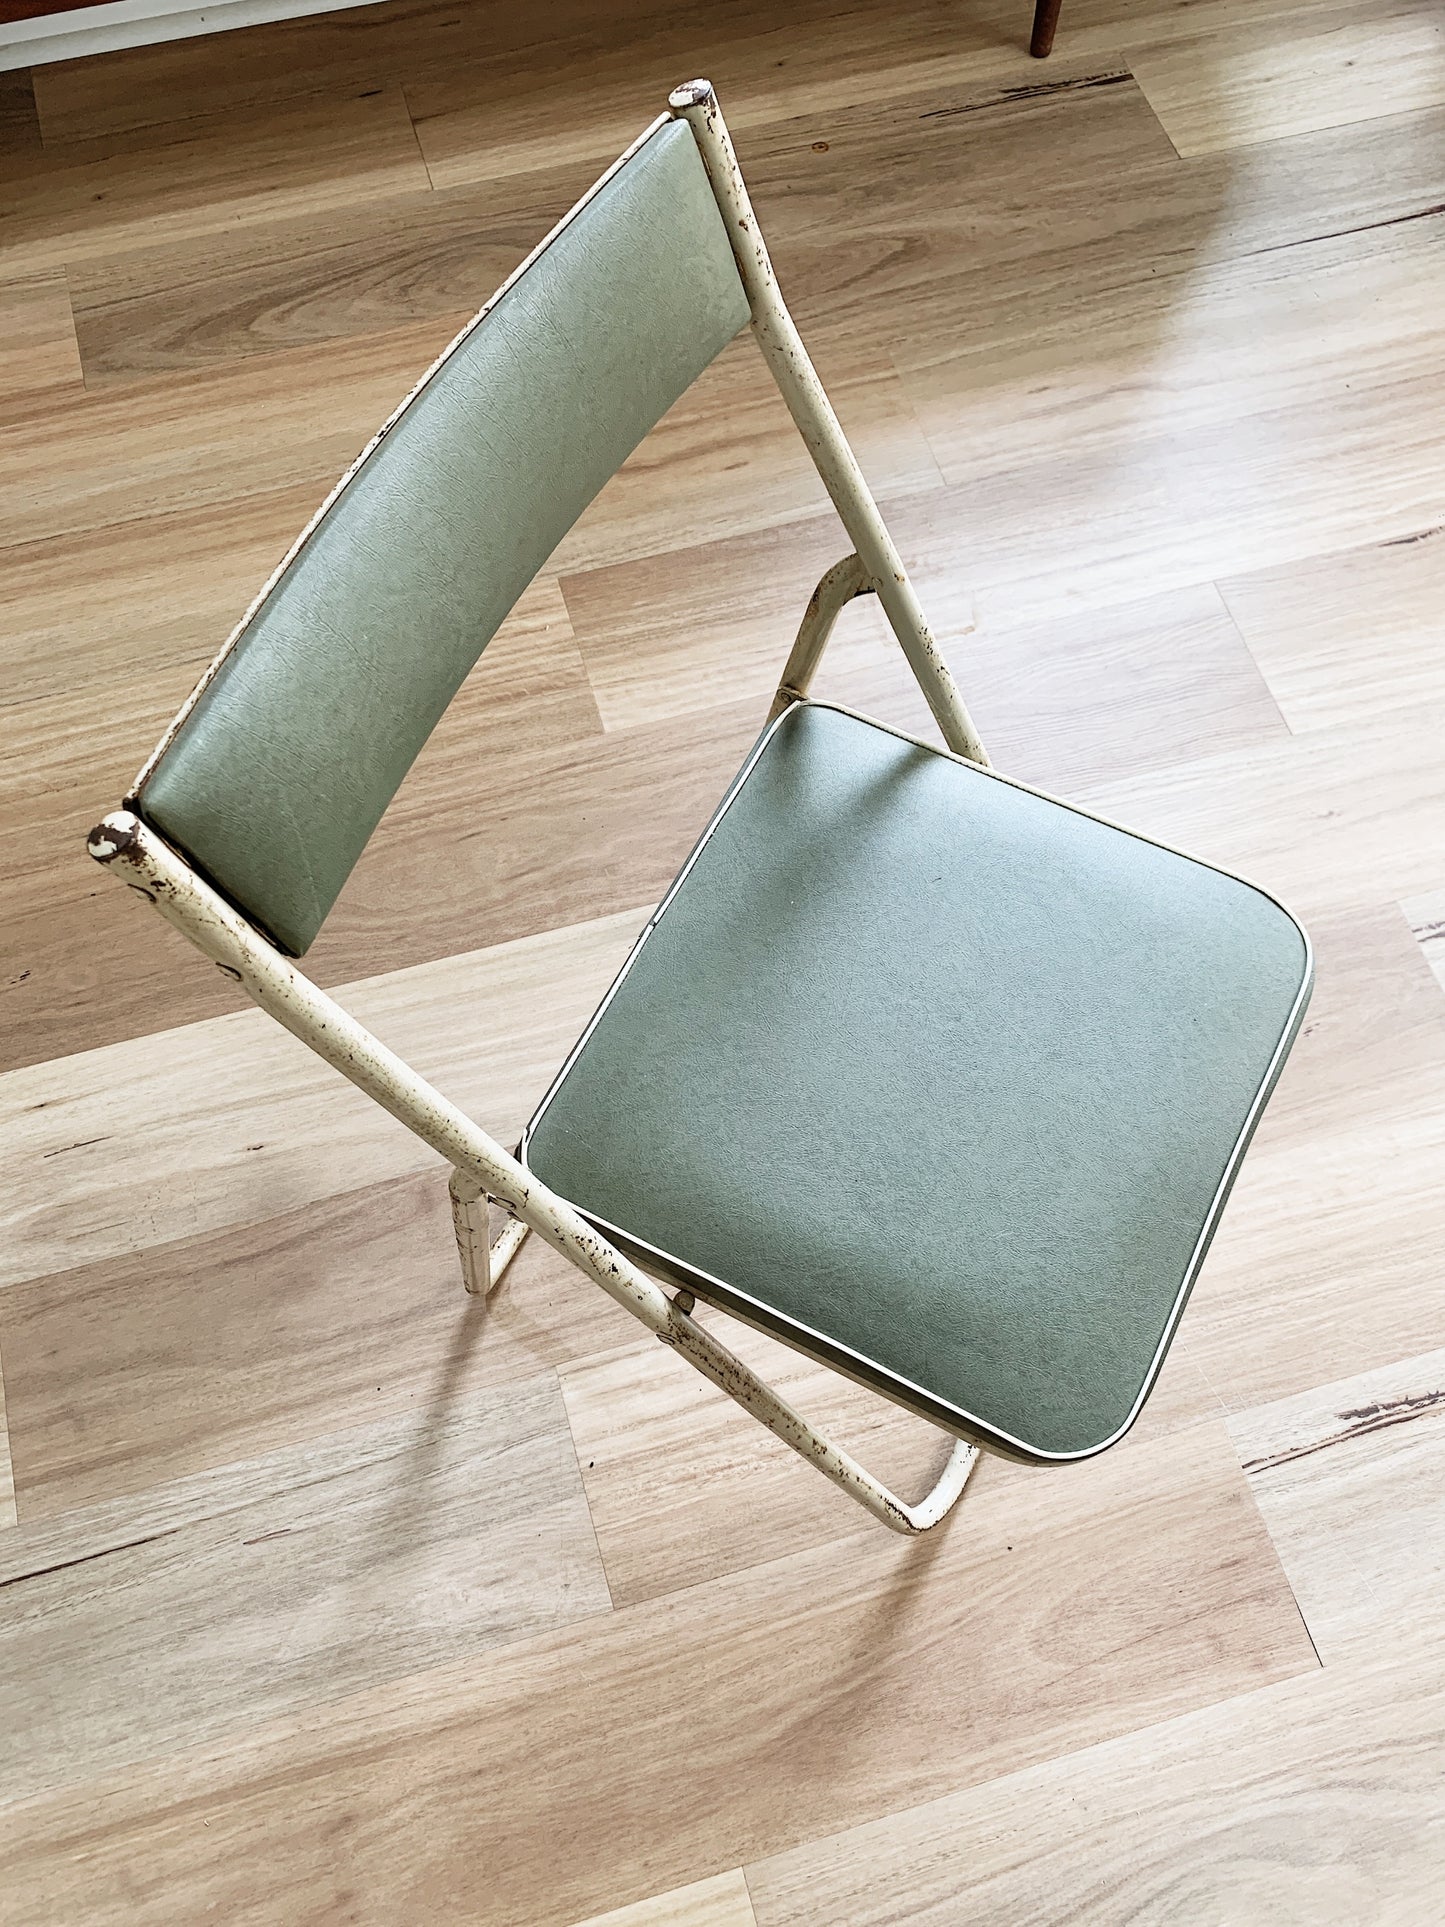 Japanese Mid Century Industrial Sankei Folding Chairs (each)